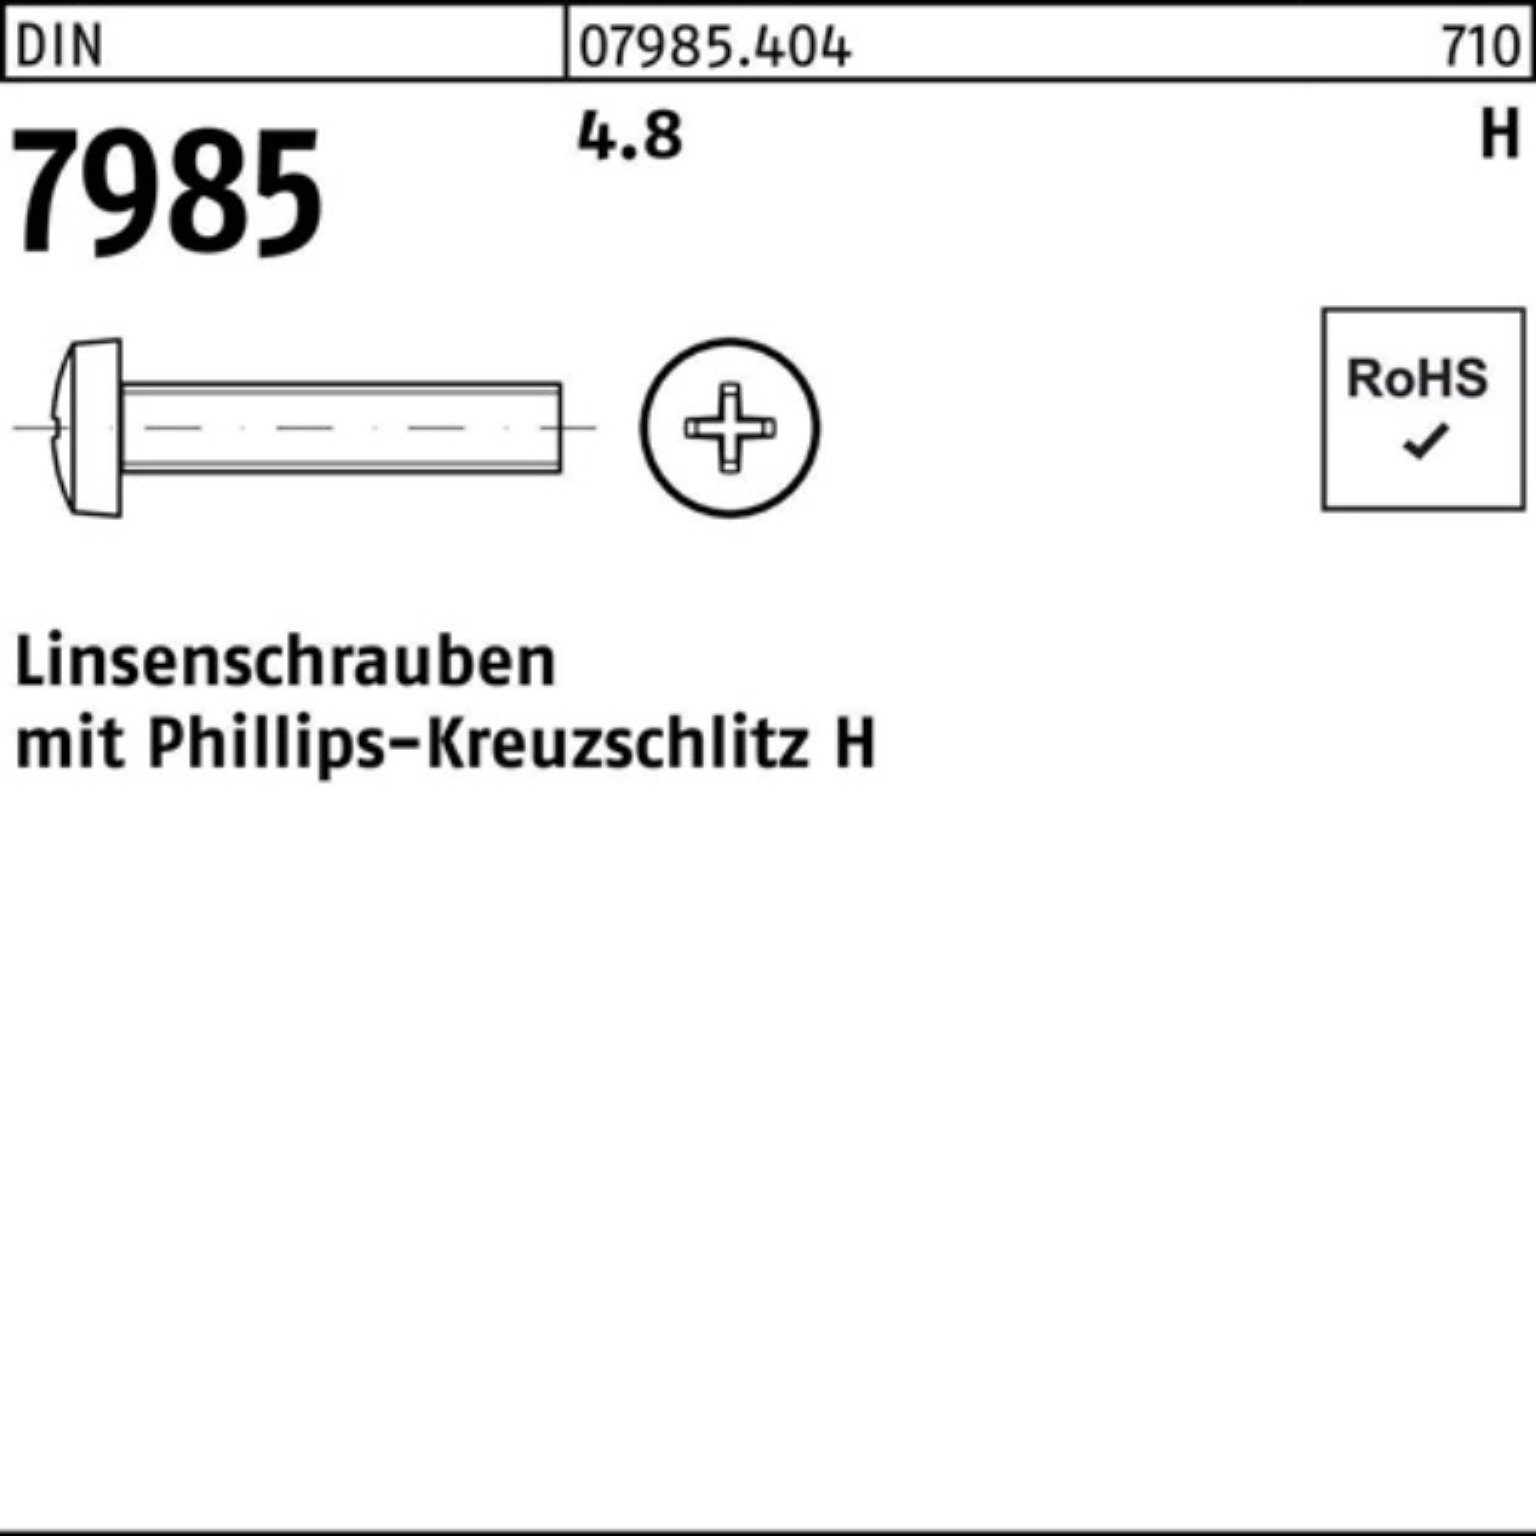 Linsenschraube Linsenschraube 2000 4.8 M3x DIN PH 2000er 16-H Reyher Stück Pack 7985 DIN 79